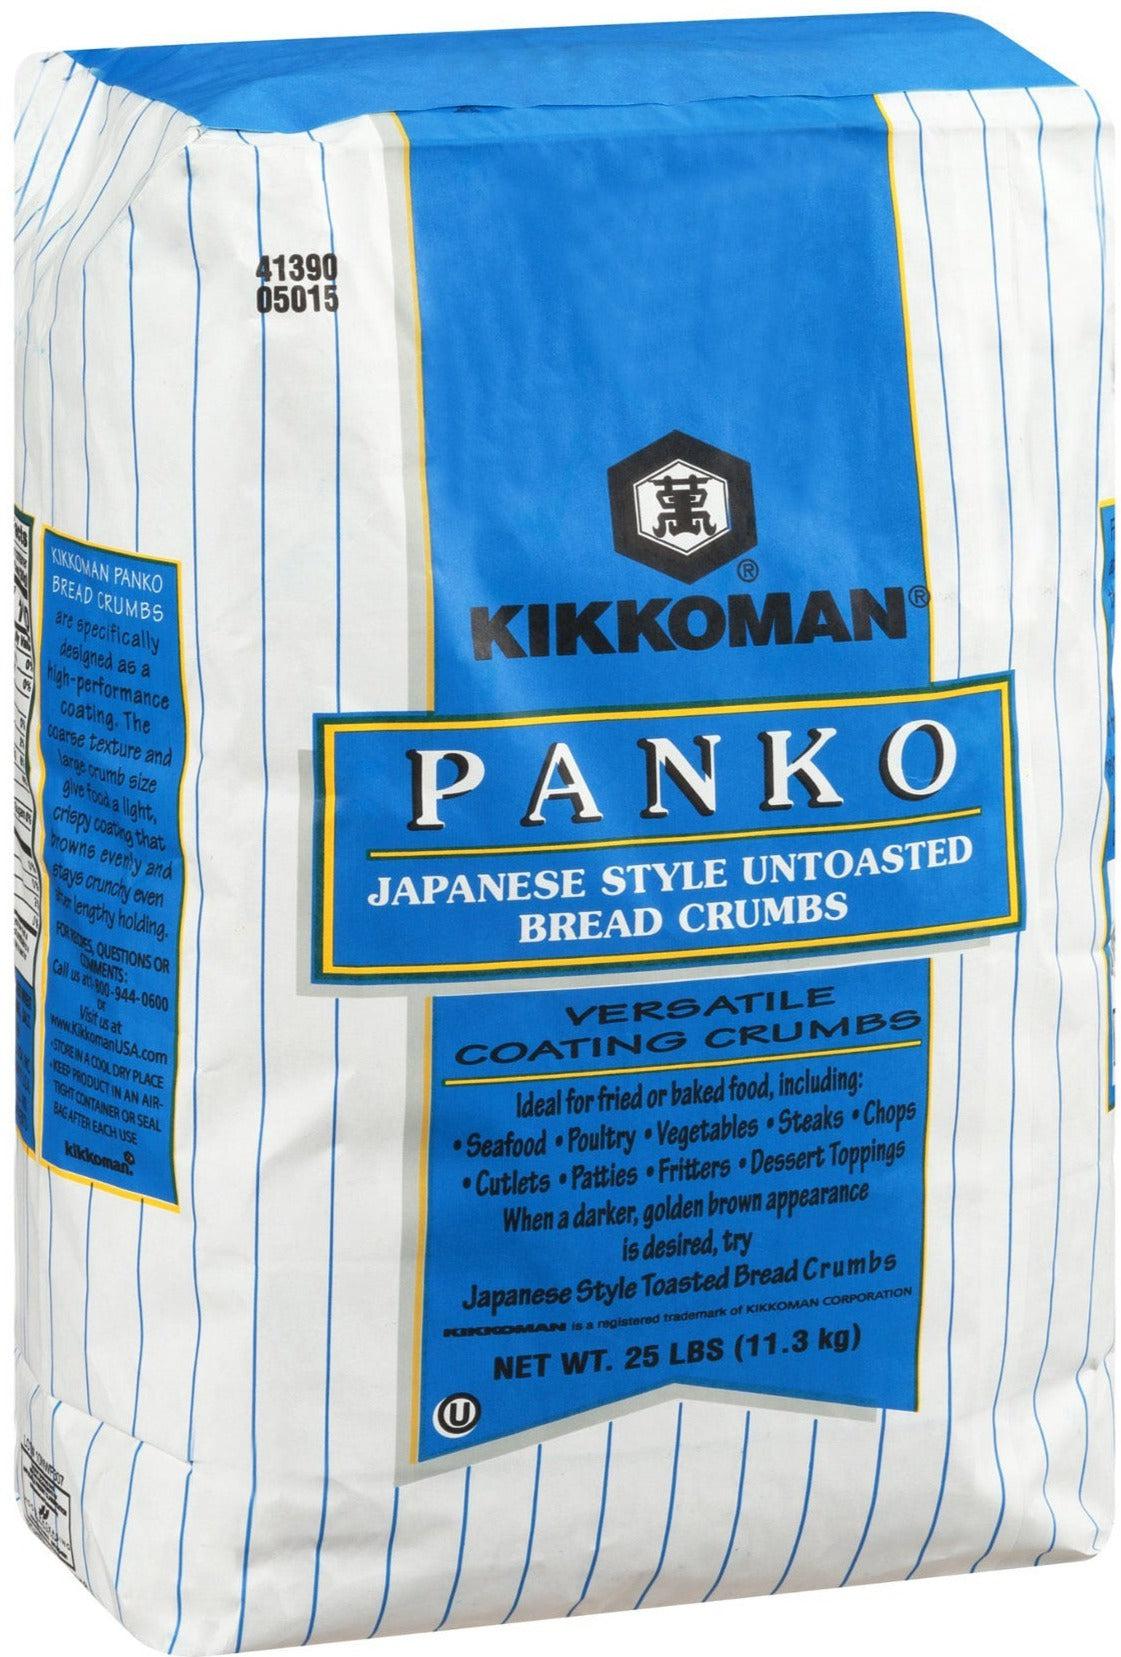 Gluten-Free Panko - Kikkoman Home Cooks